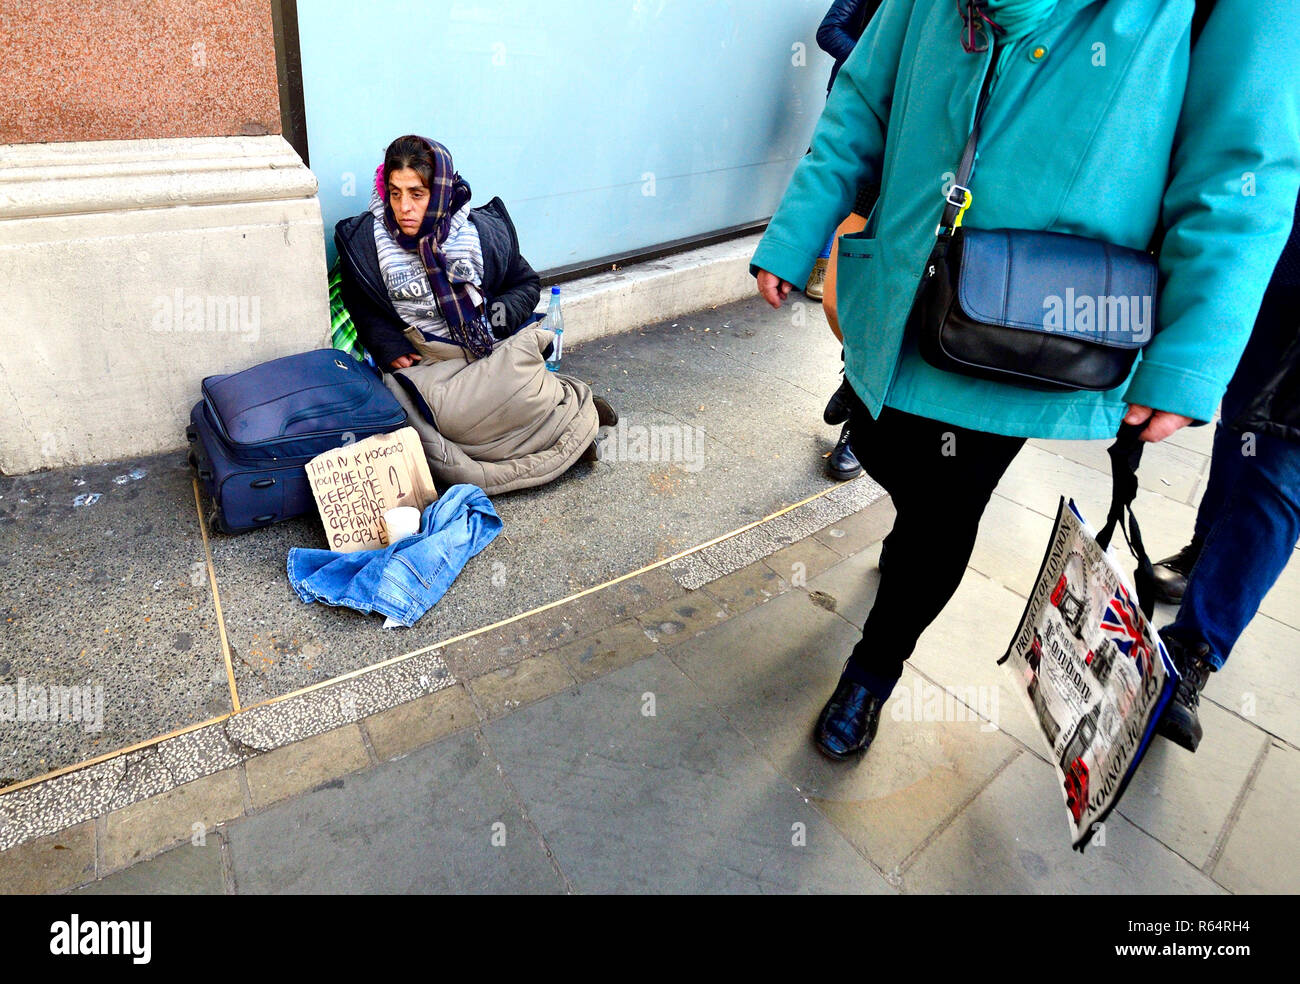 Homeless woman begging in Trafalgar Square, London, England, UK. Stock Photo